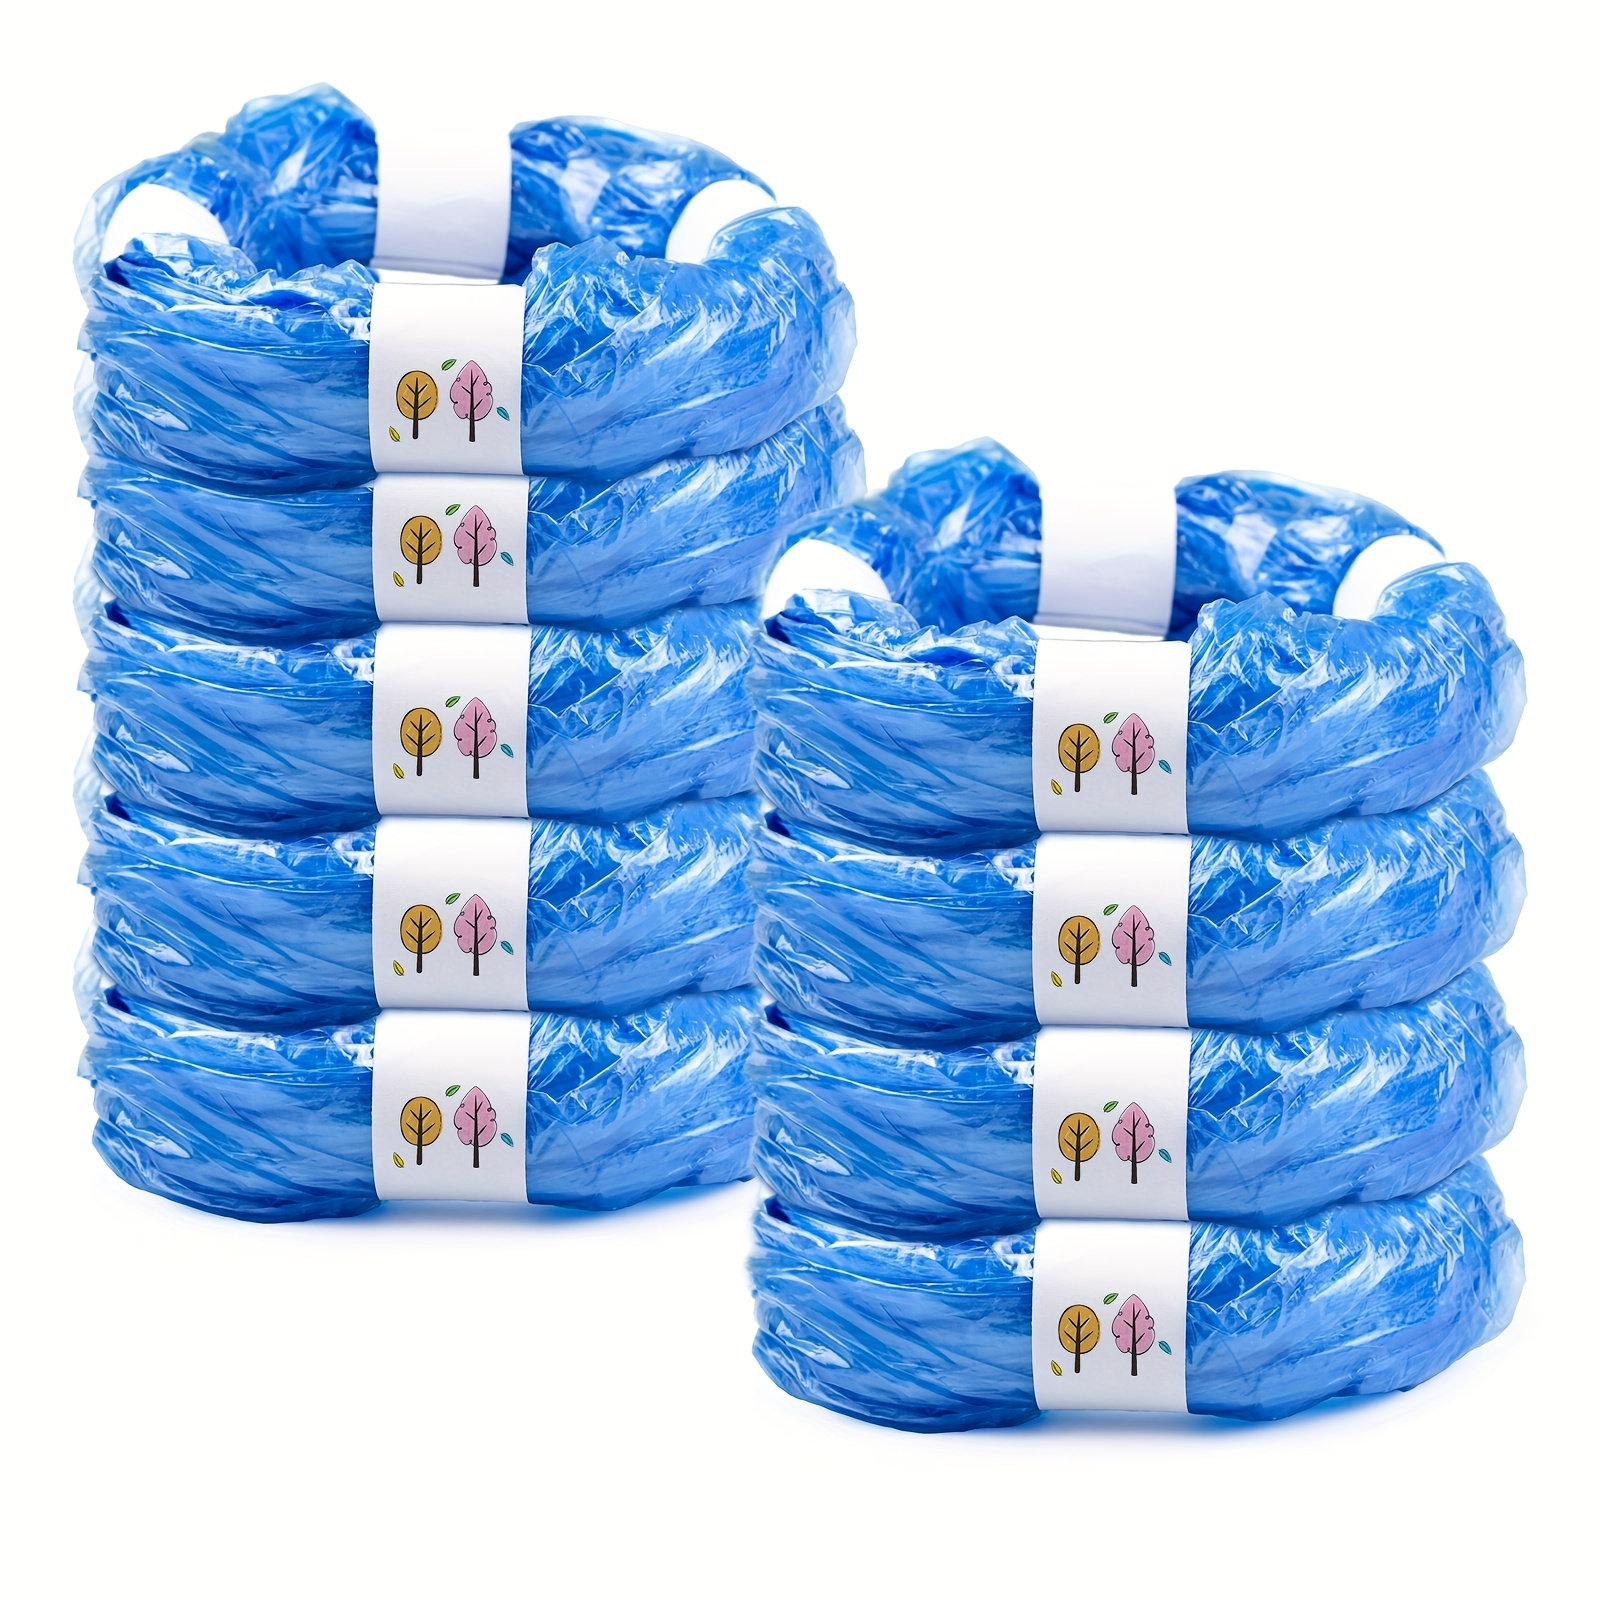 

9 Packs Refill Bags Compatible With Diaper Pails Pails